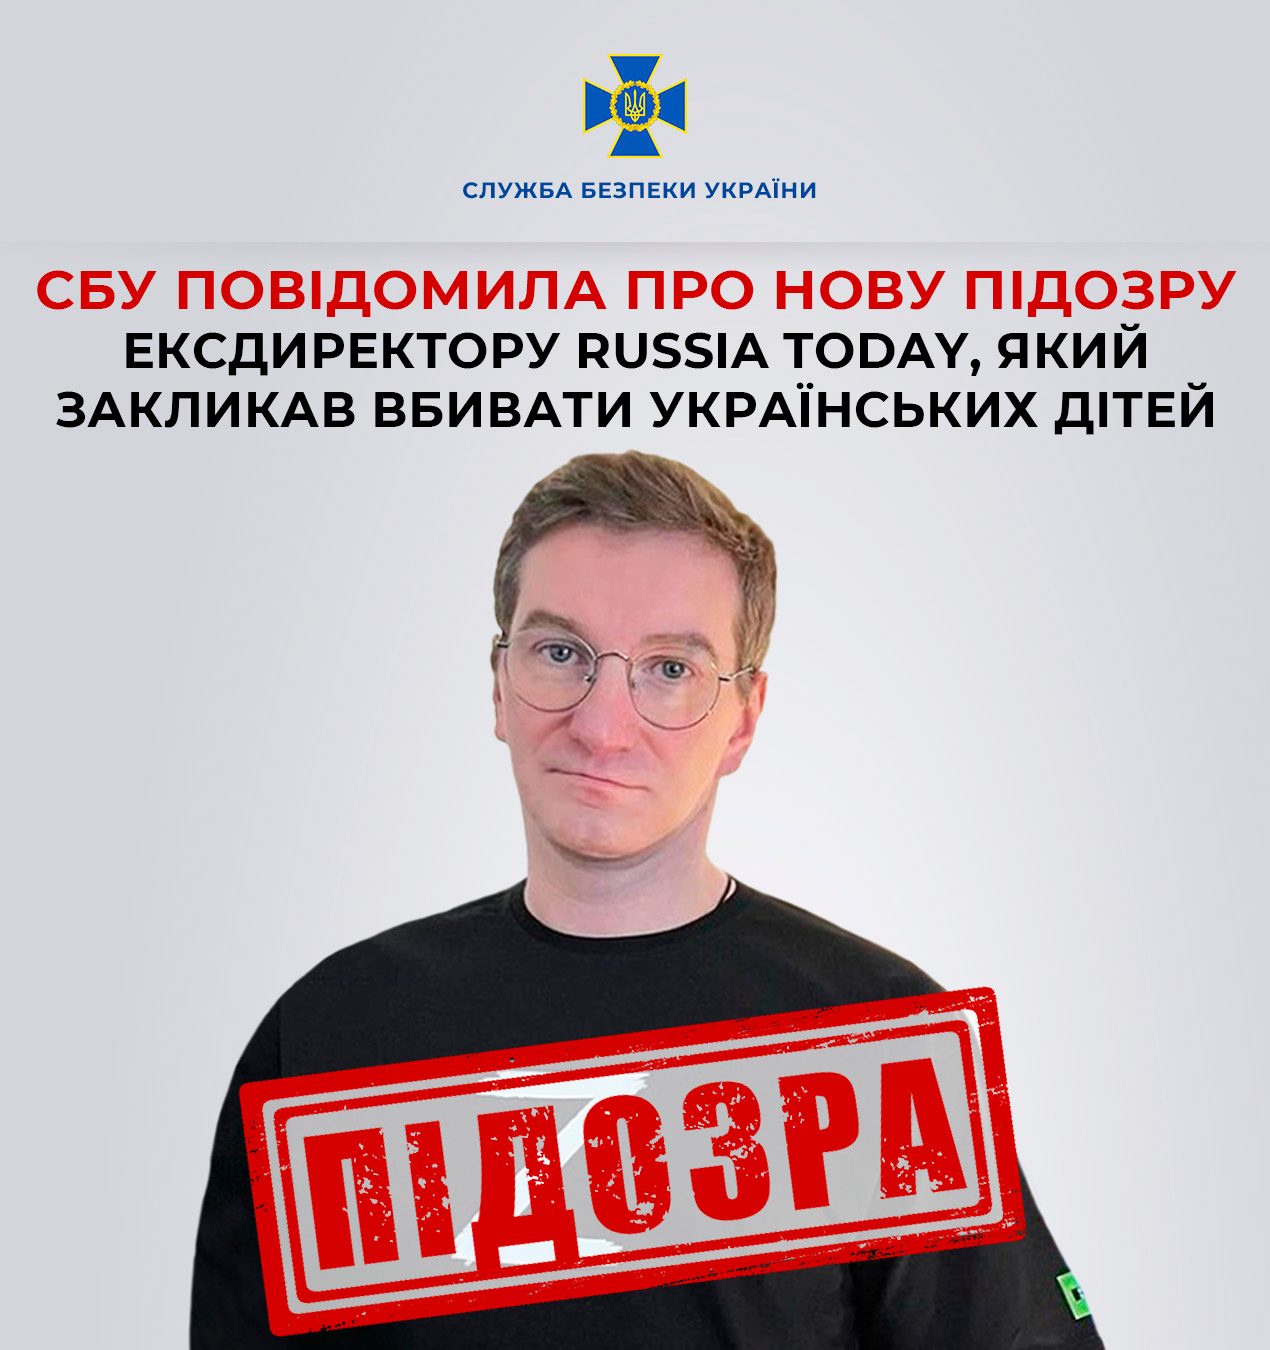 SBU lodges case against former director of Russia Today for calling killing of Ukrainian children (Image Courtesy: Facebook)